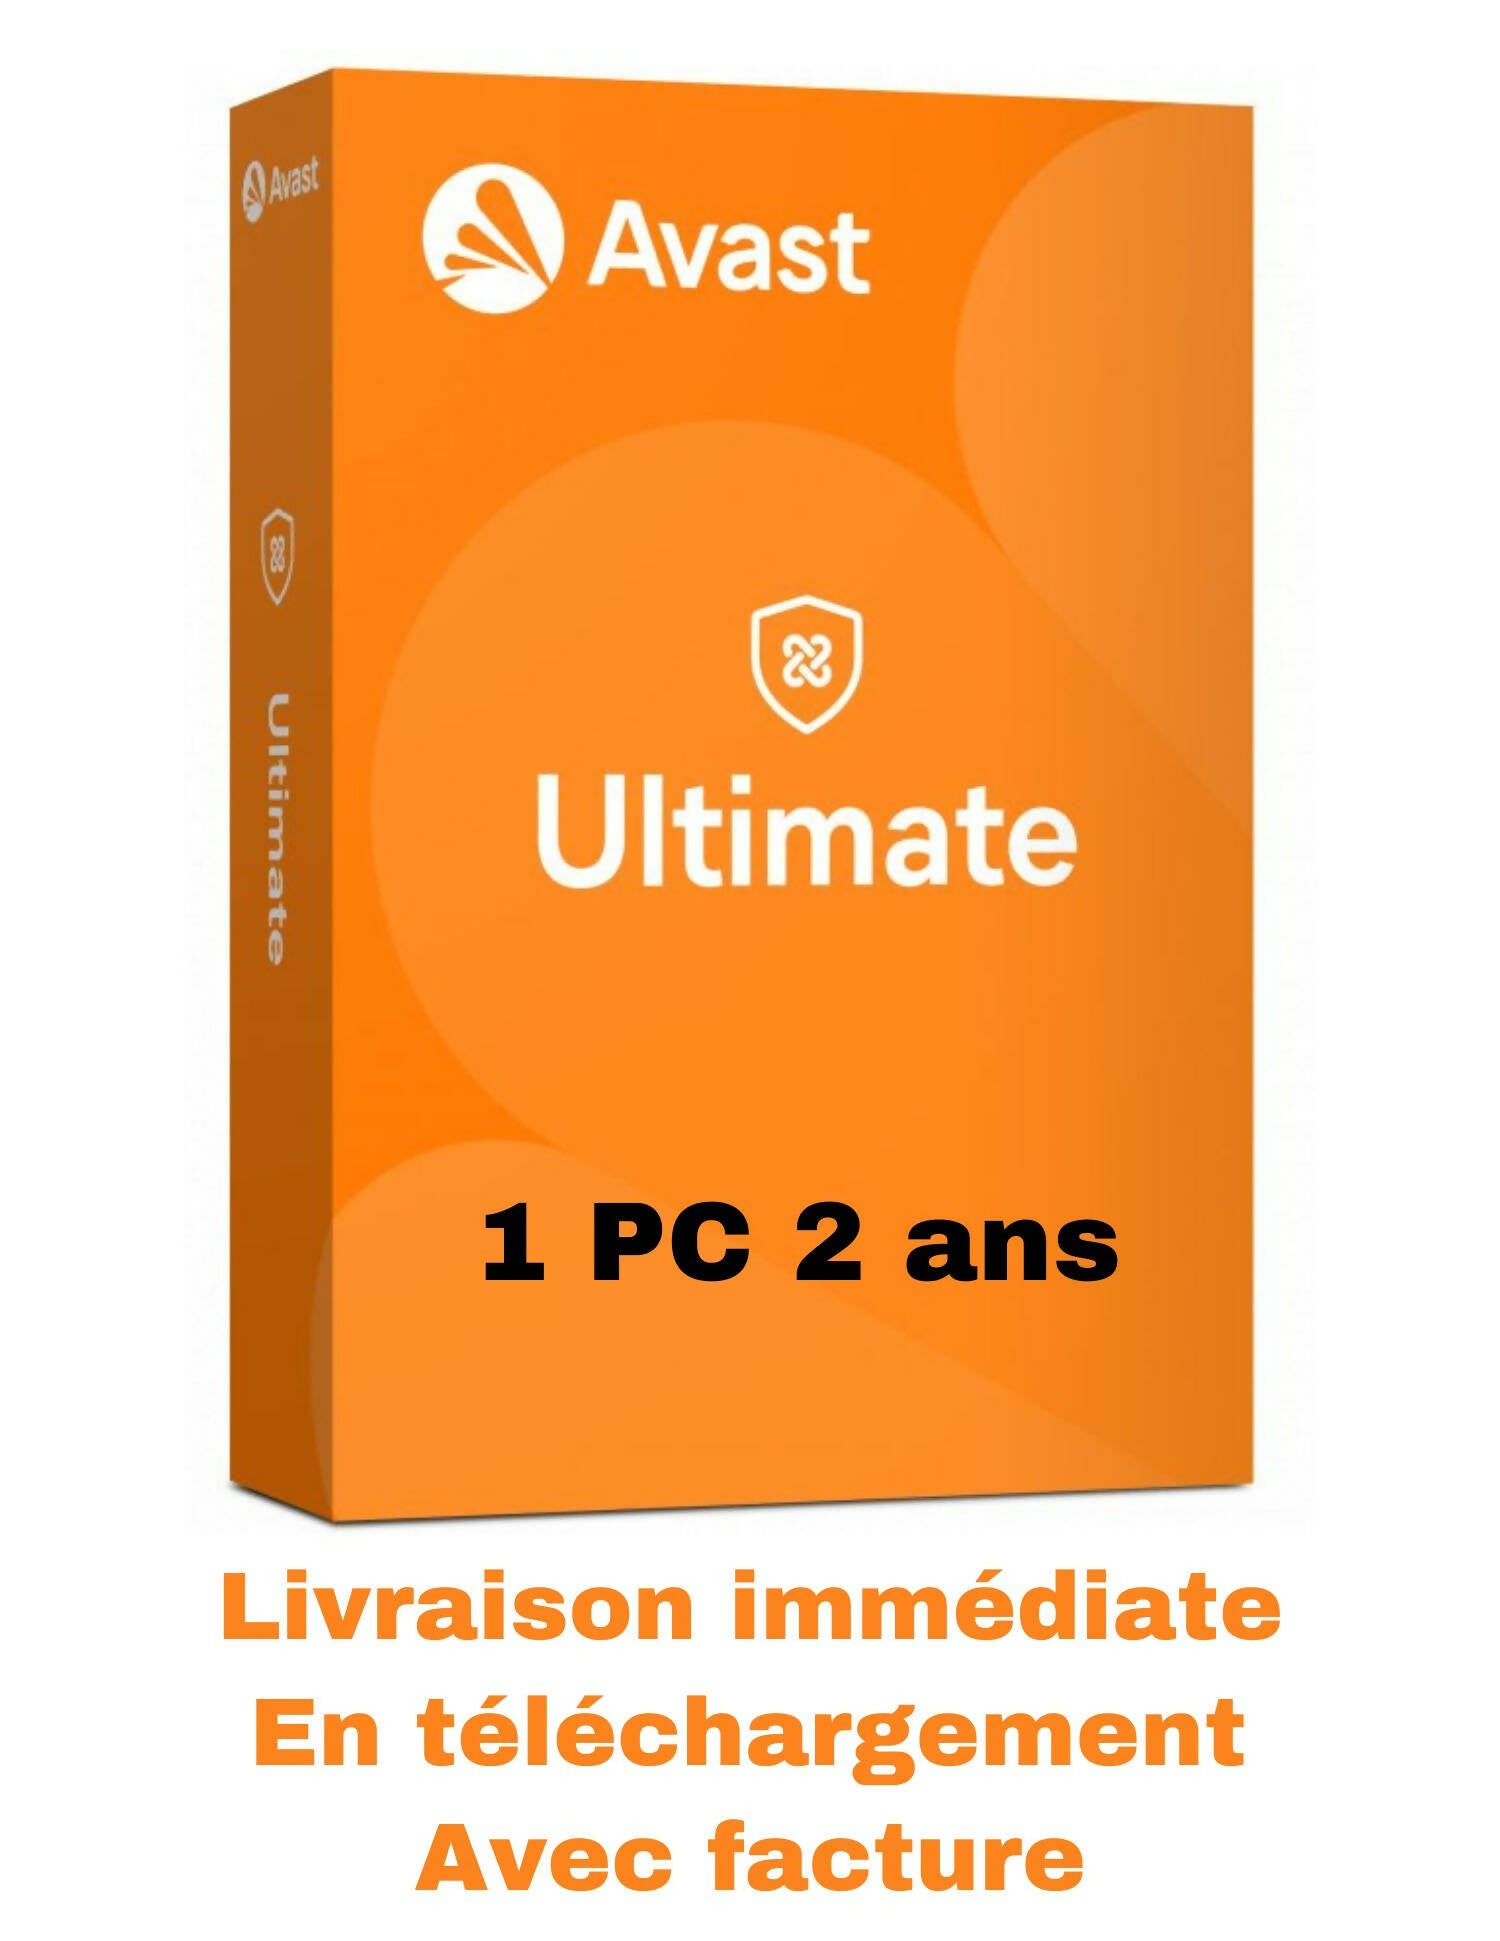 Avast Ultimate 1 PC 2 ans clicktofournisseur.com